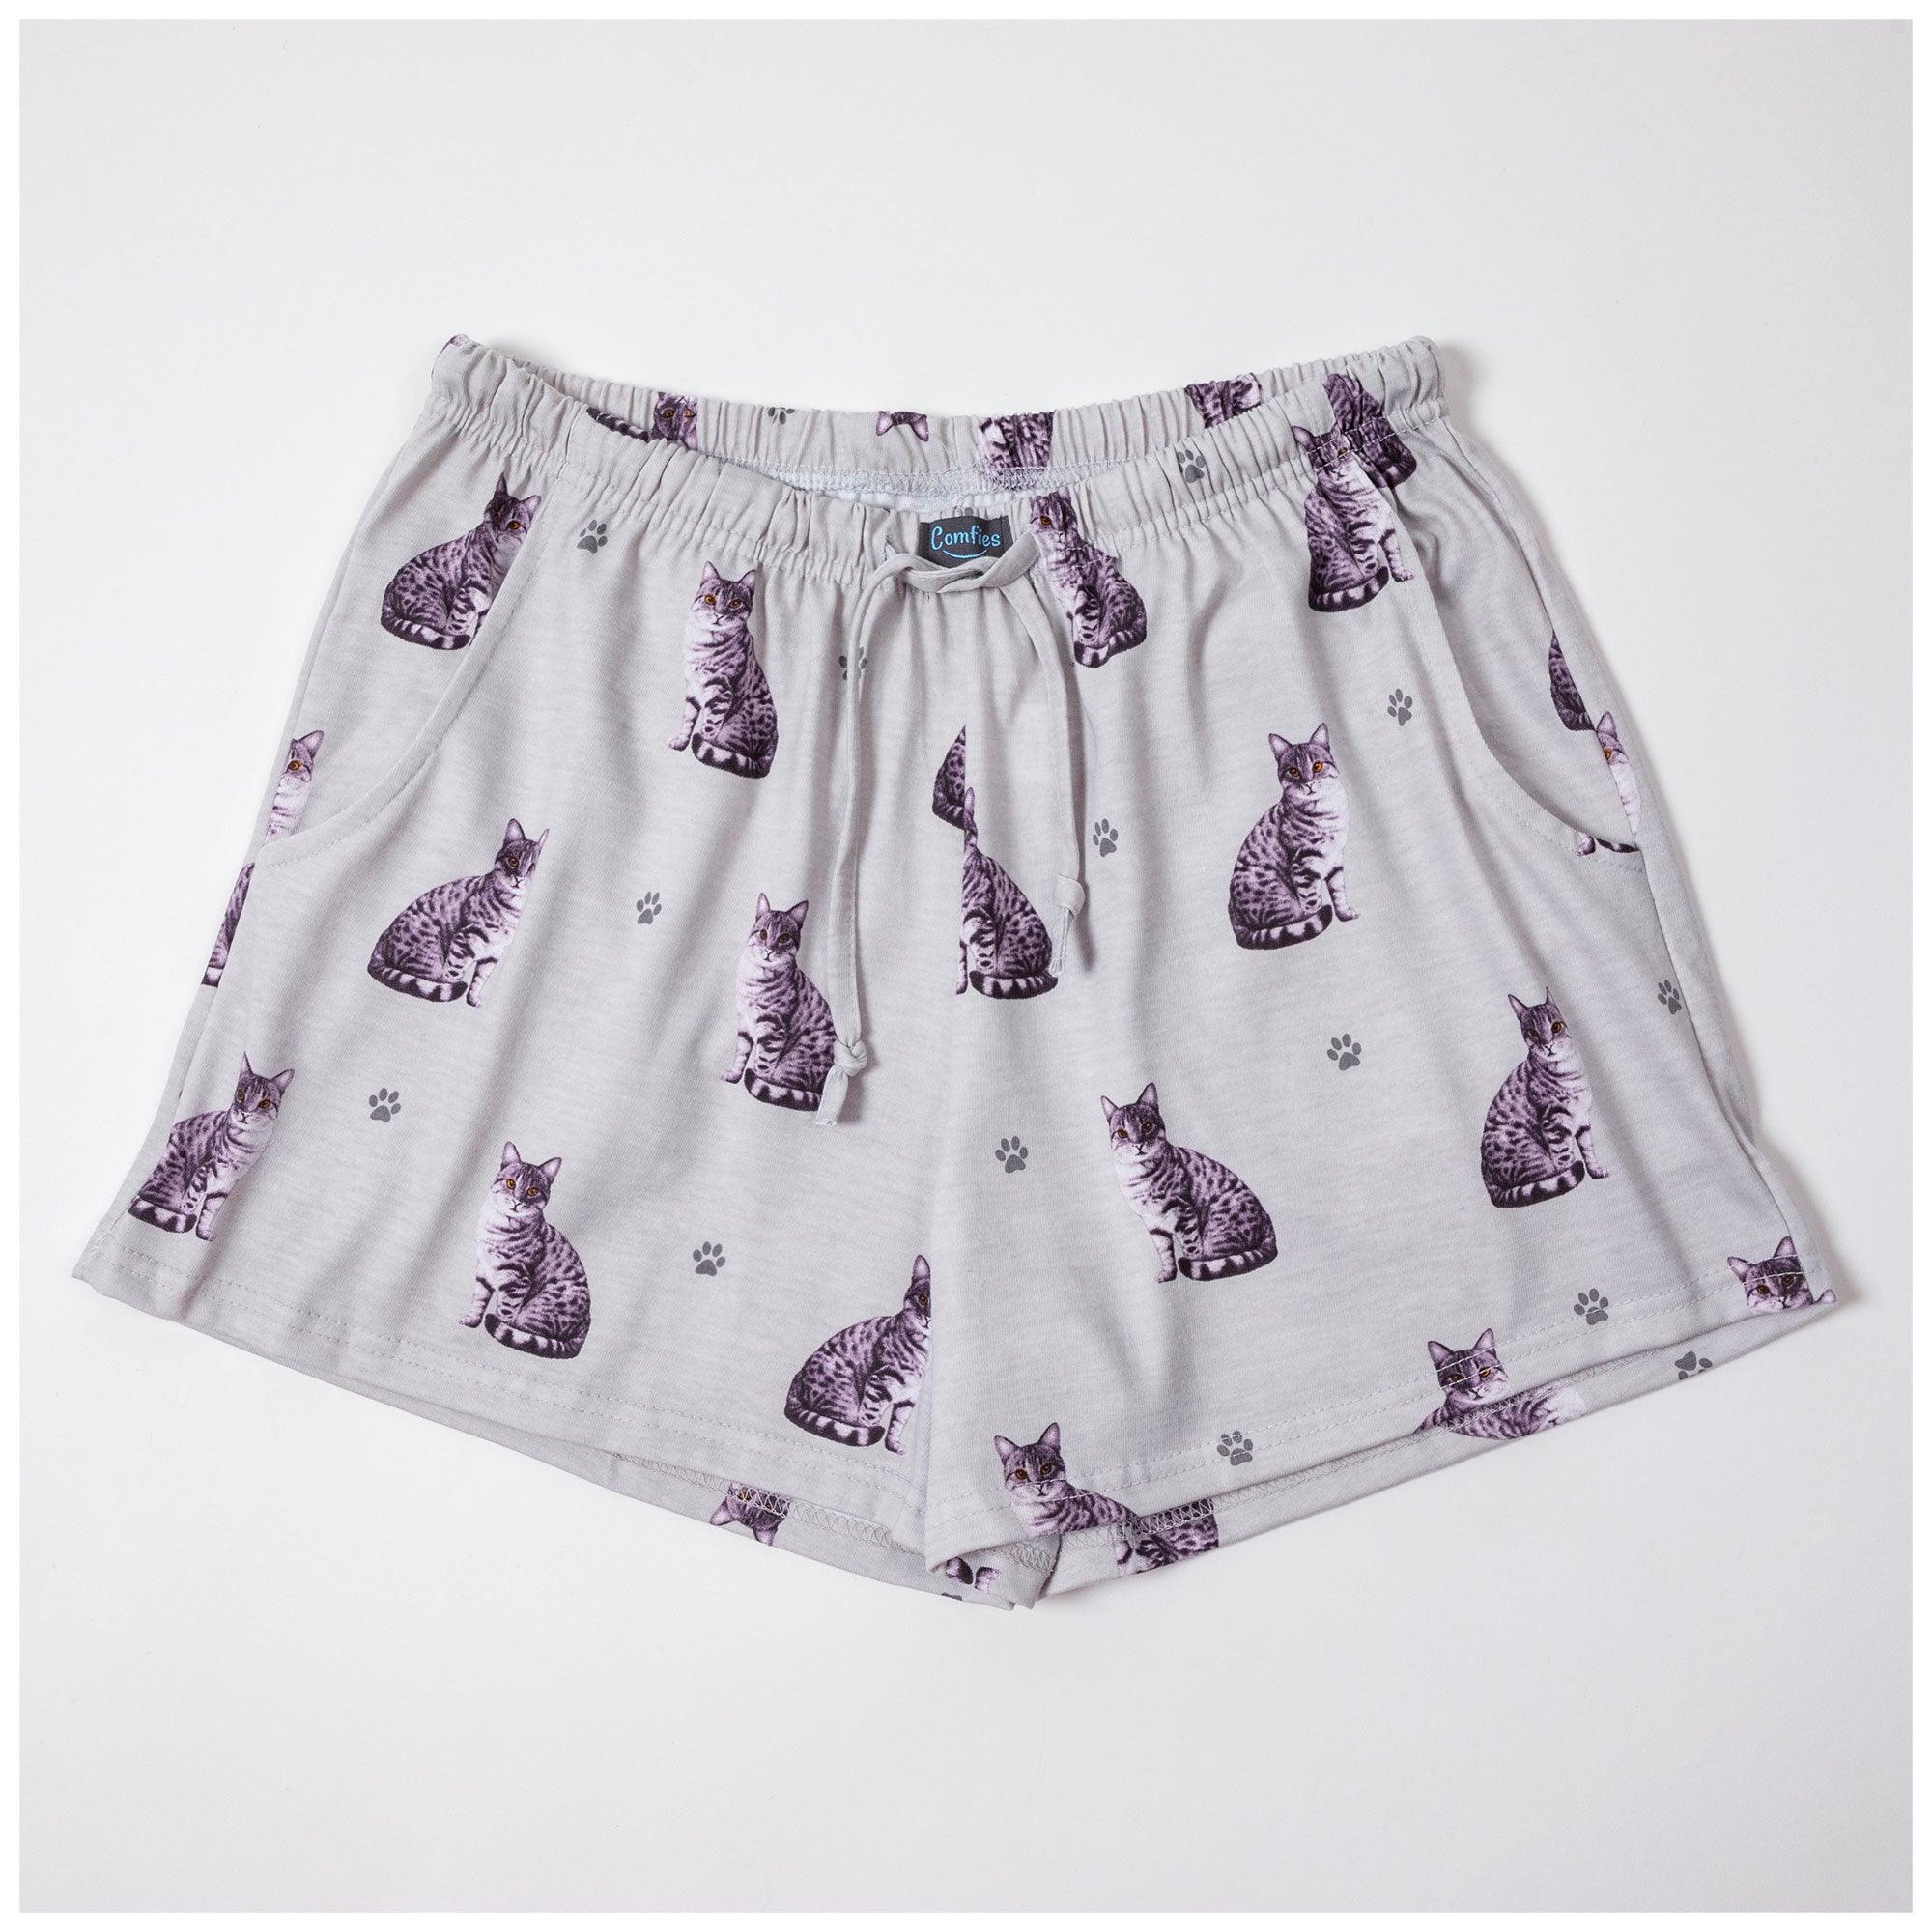 Cute Cat Lounge Shorts - Silver Tabby Cat - M